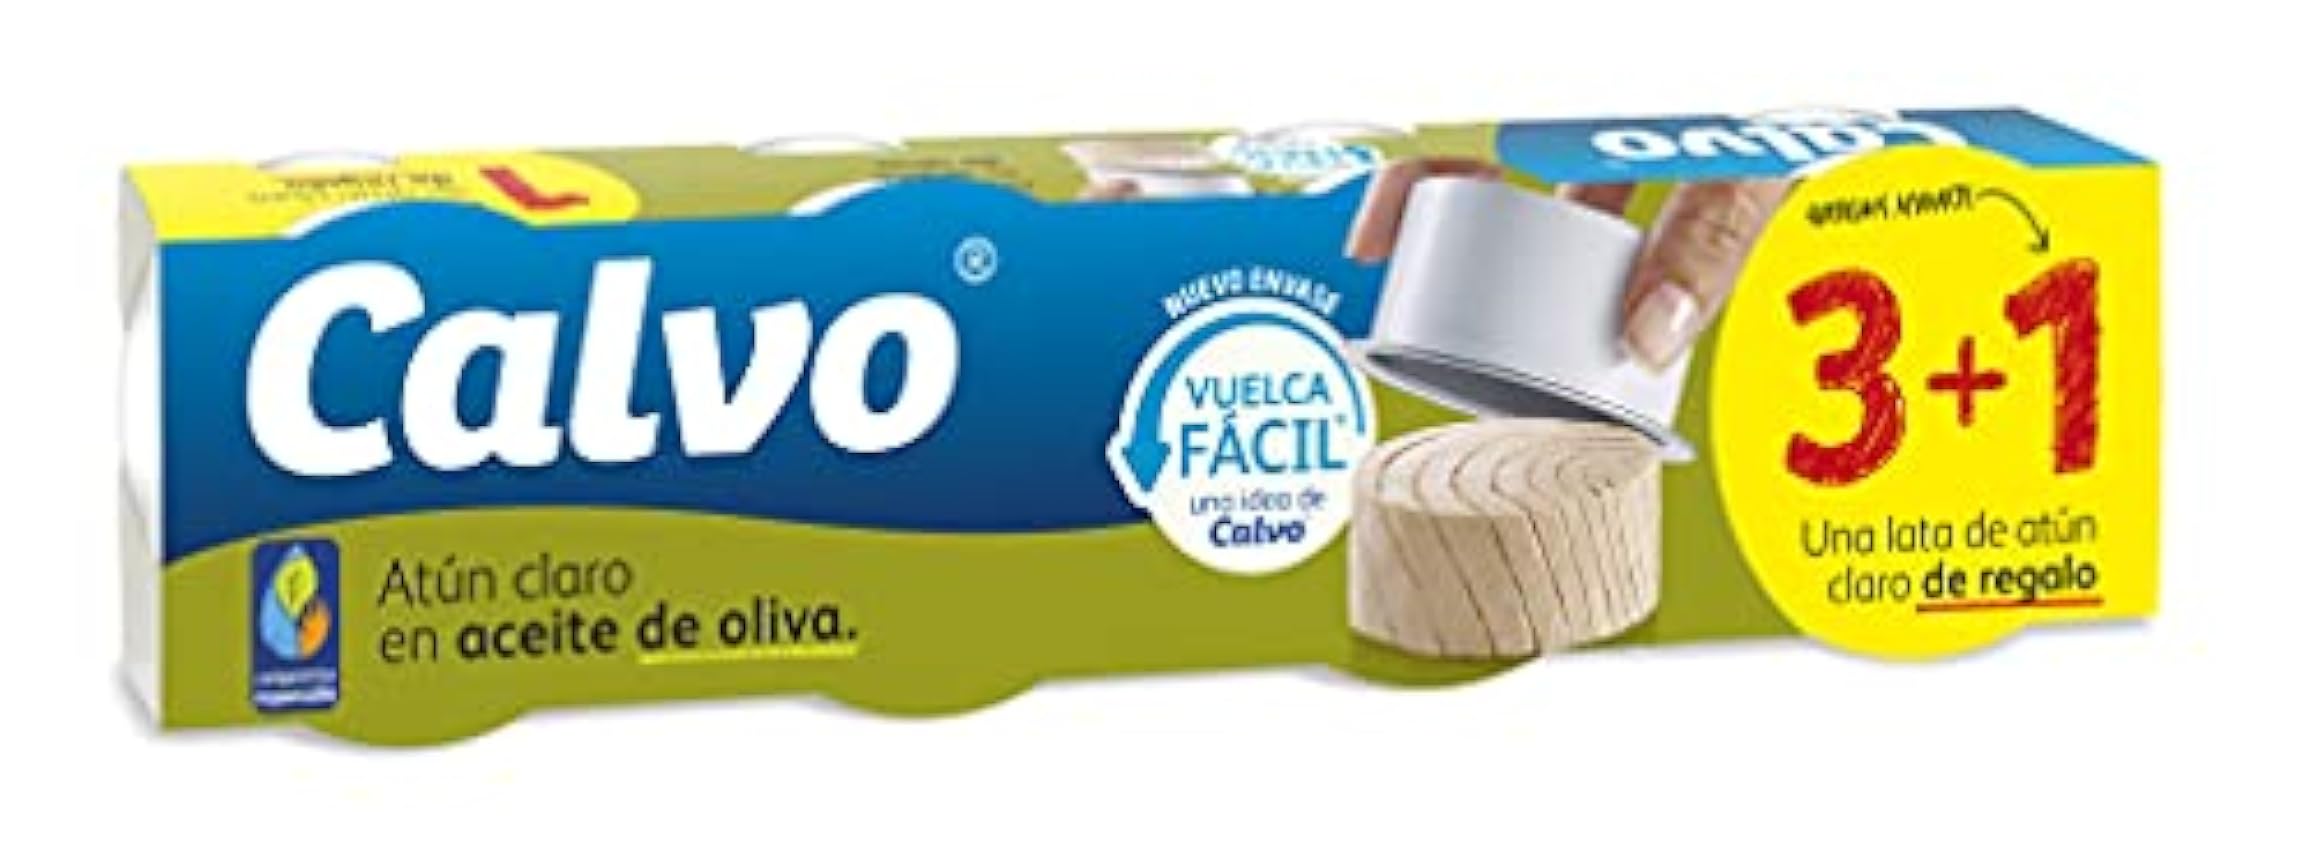 Calvo Atún Claro en Aceite de Oliva Pack de 3+1, 260g J